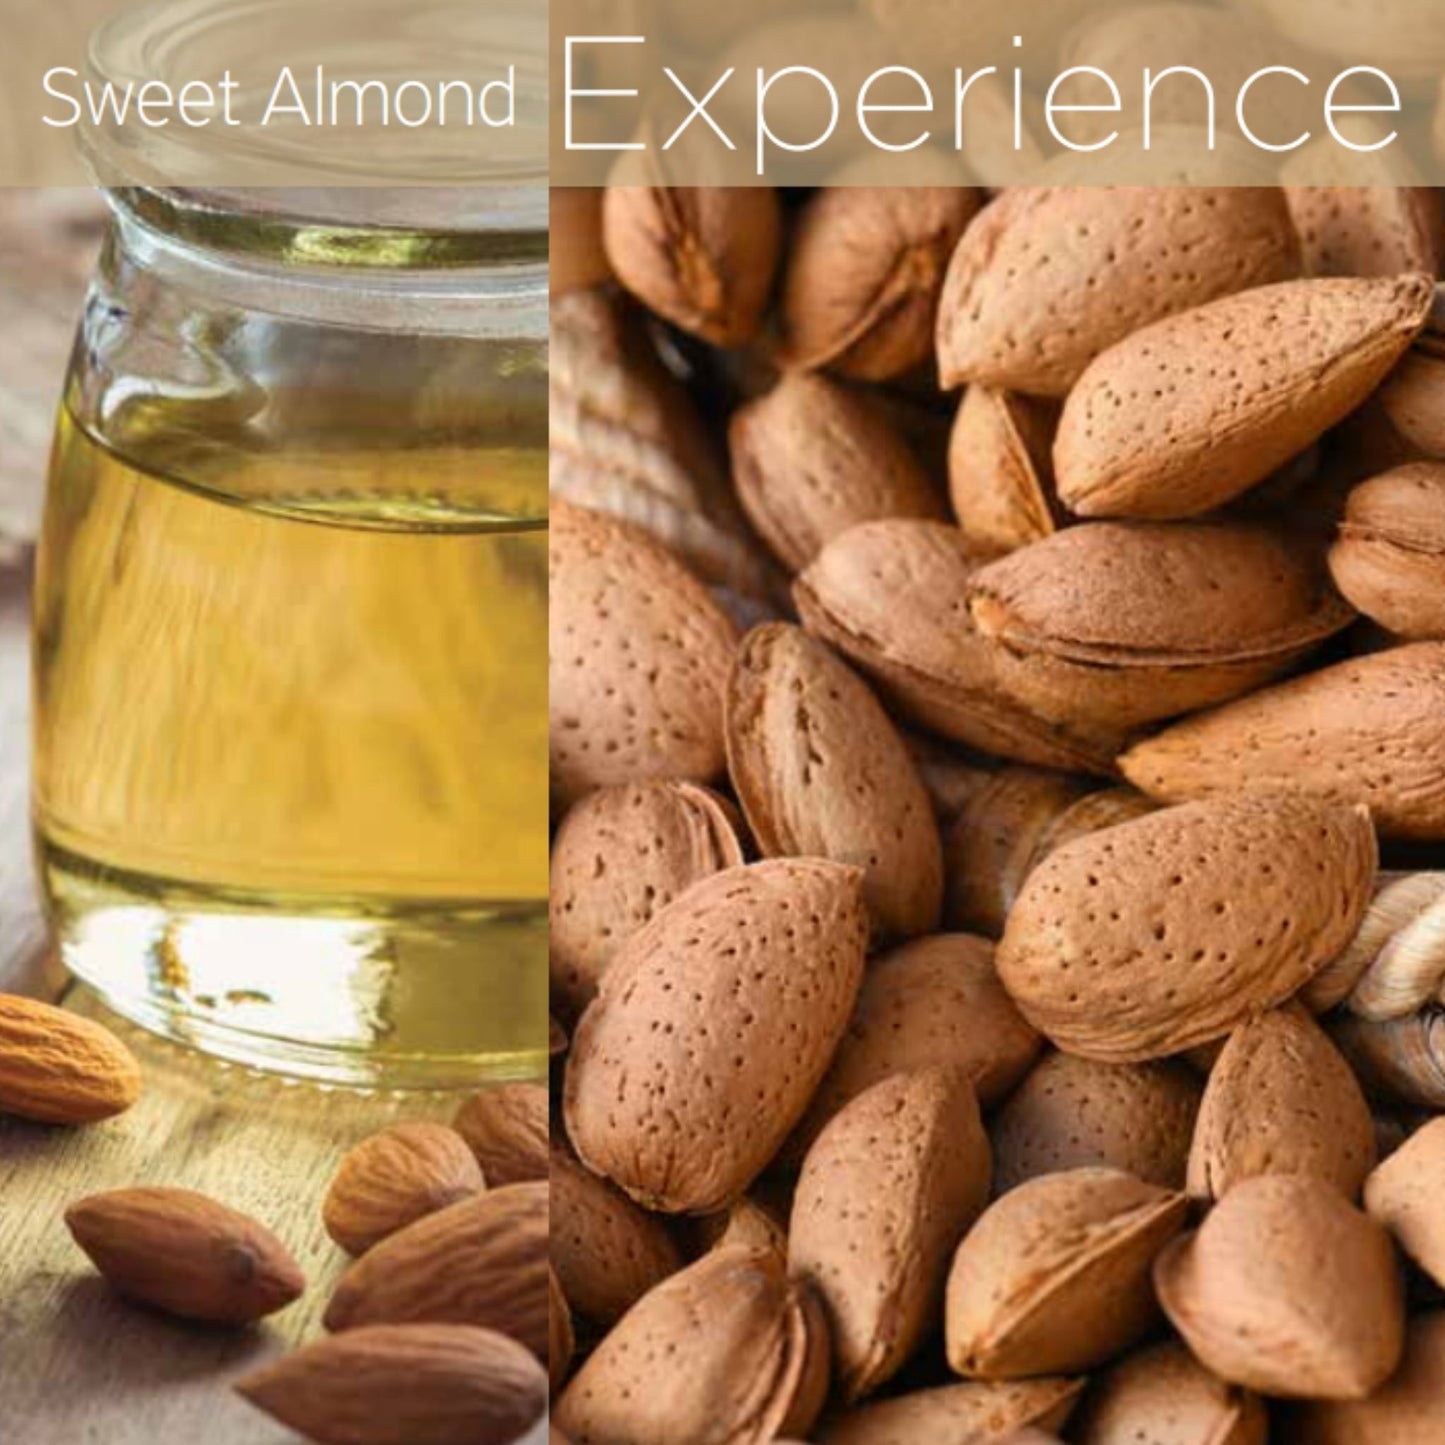 Sweet Almond Dry Body Oil